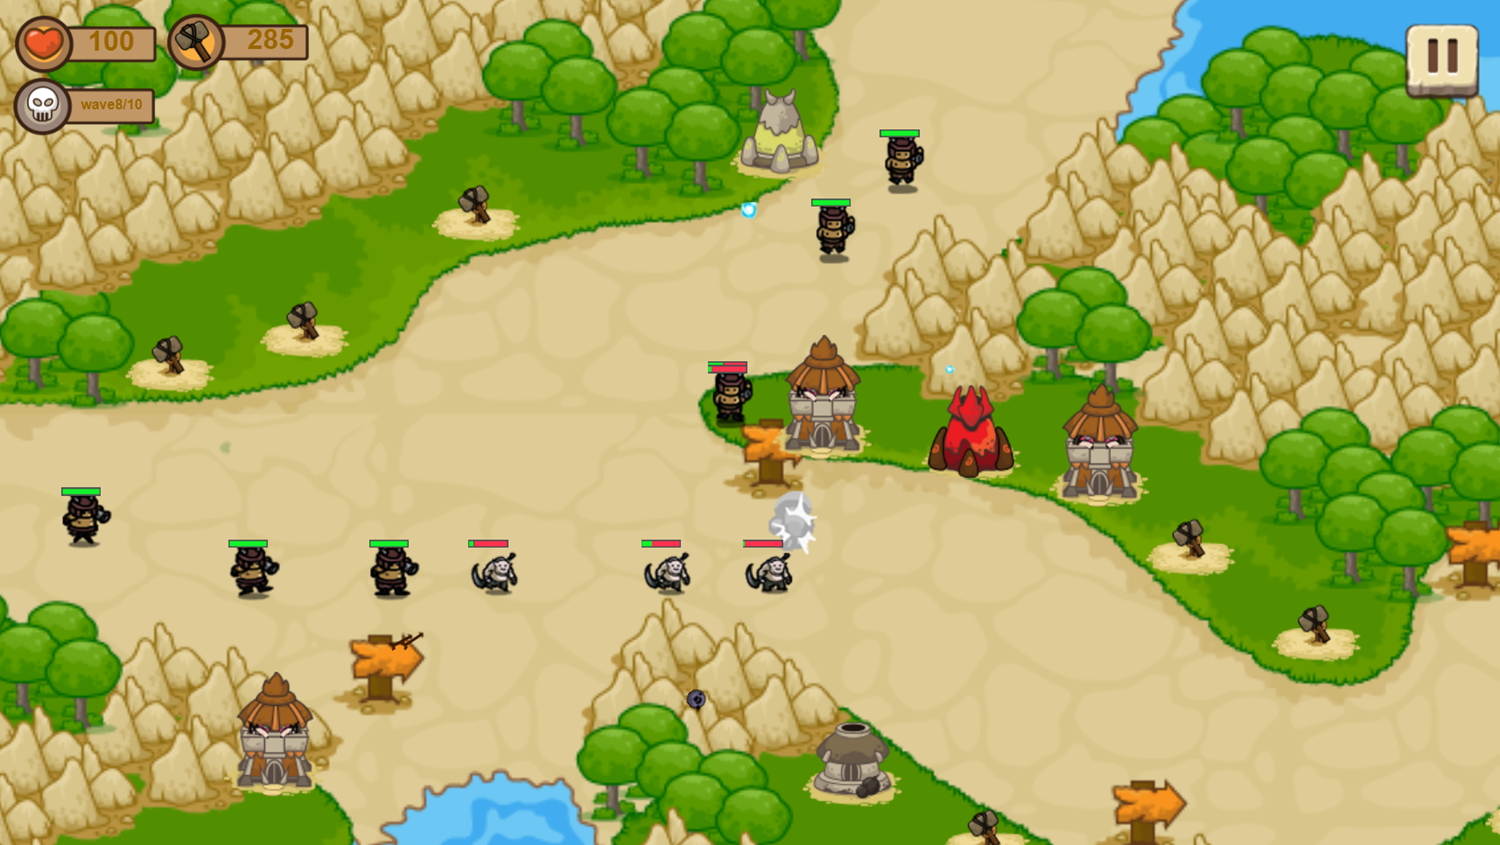 Tower Defense Game Play Screenshot.